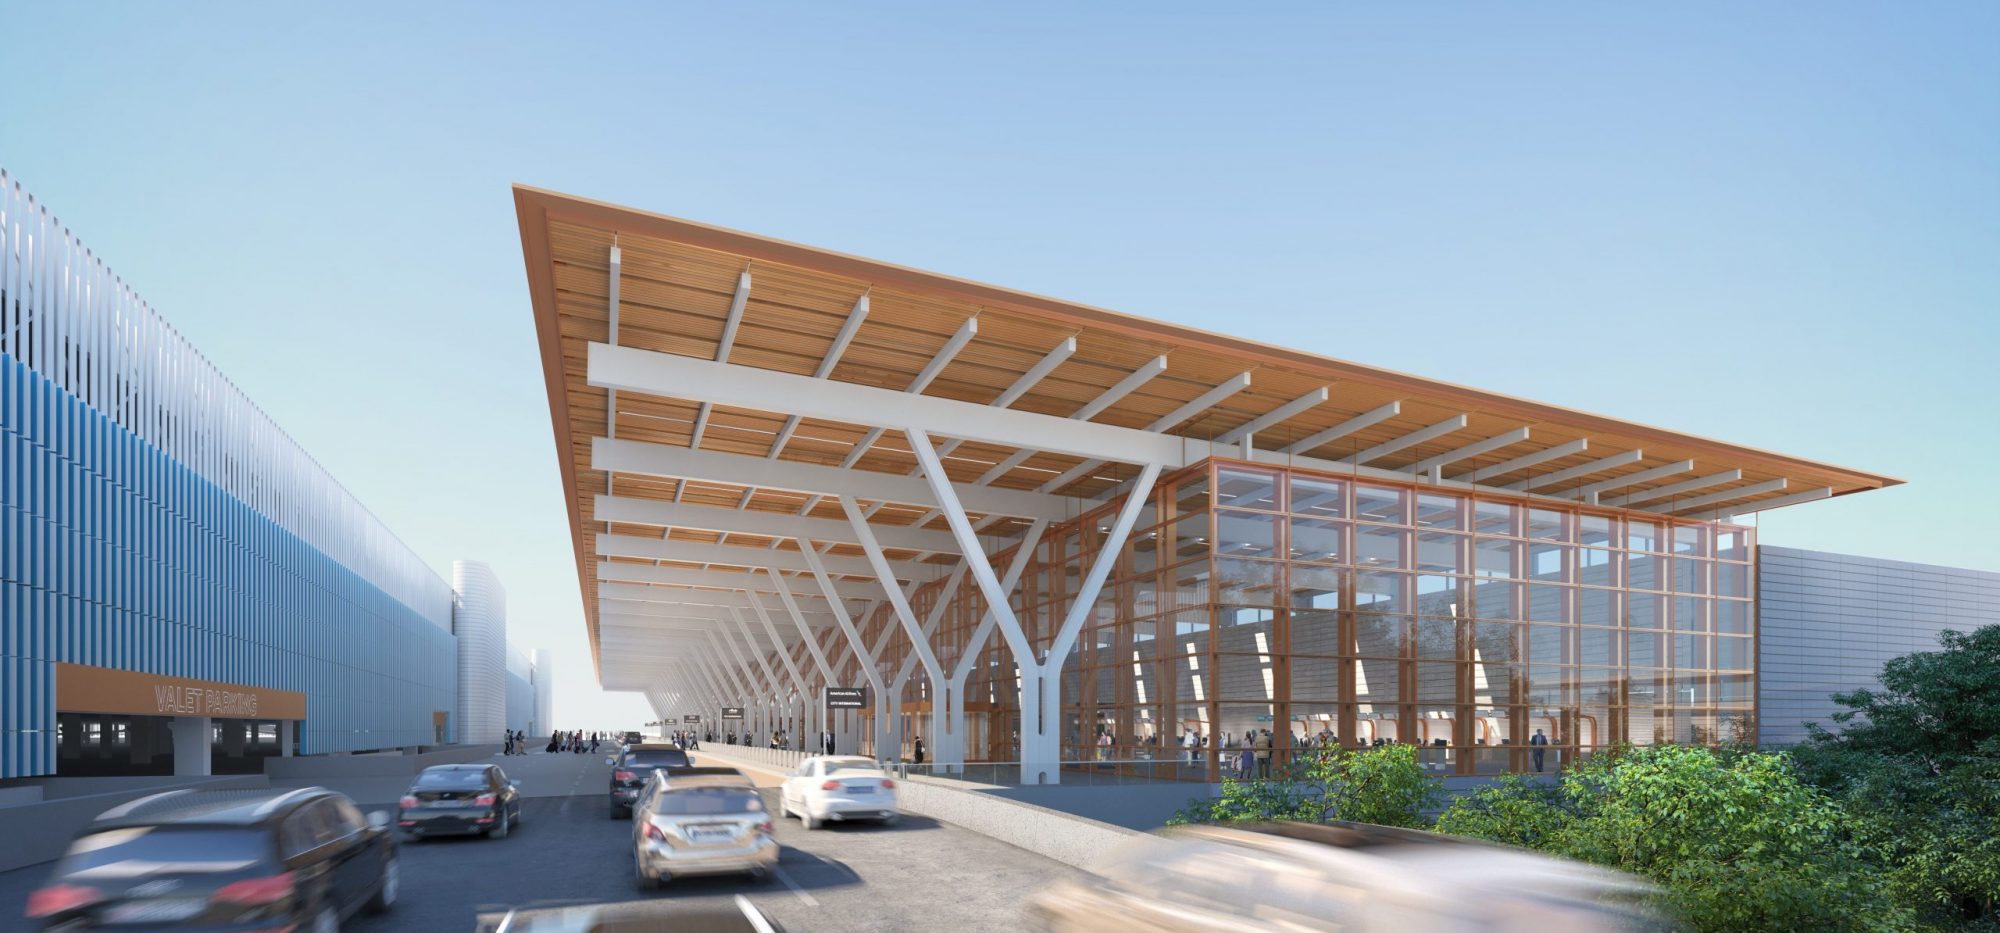 kansas city international airport new terminal